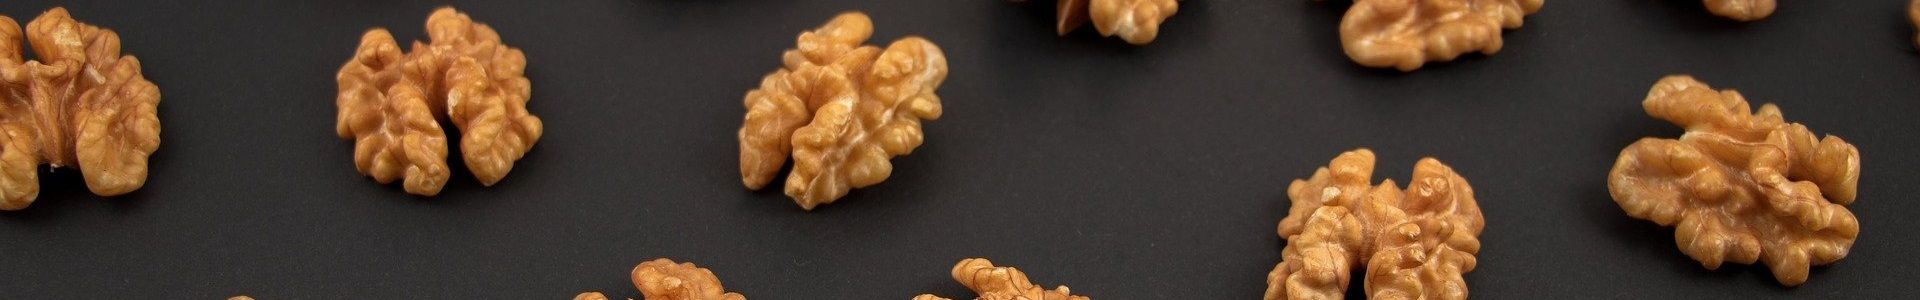 brain walnut representation